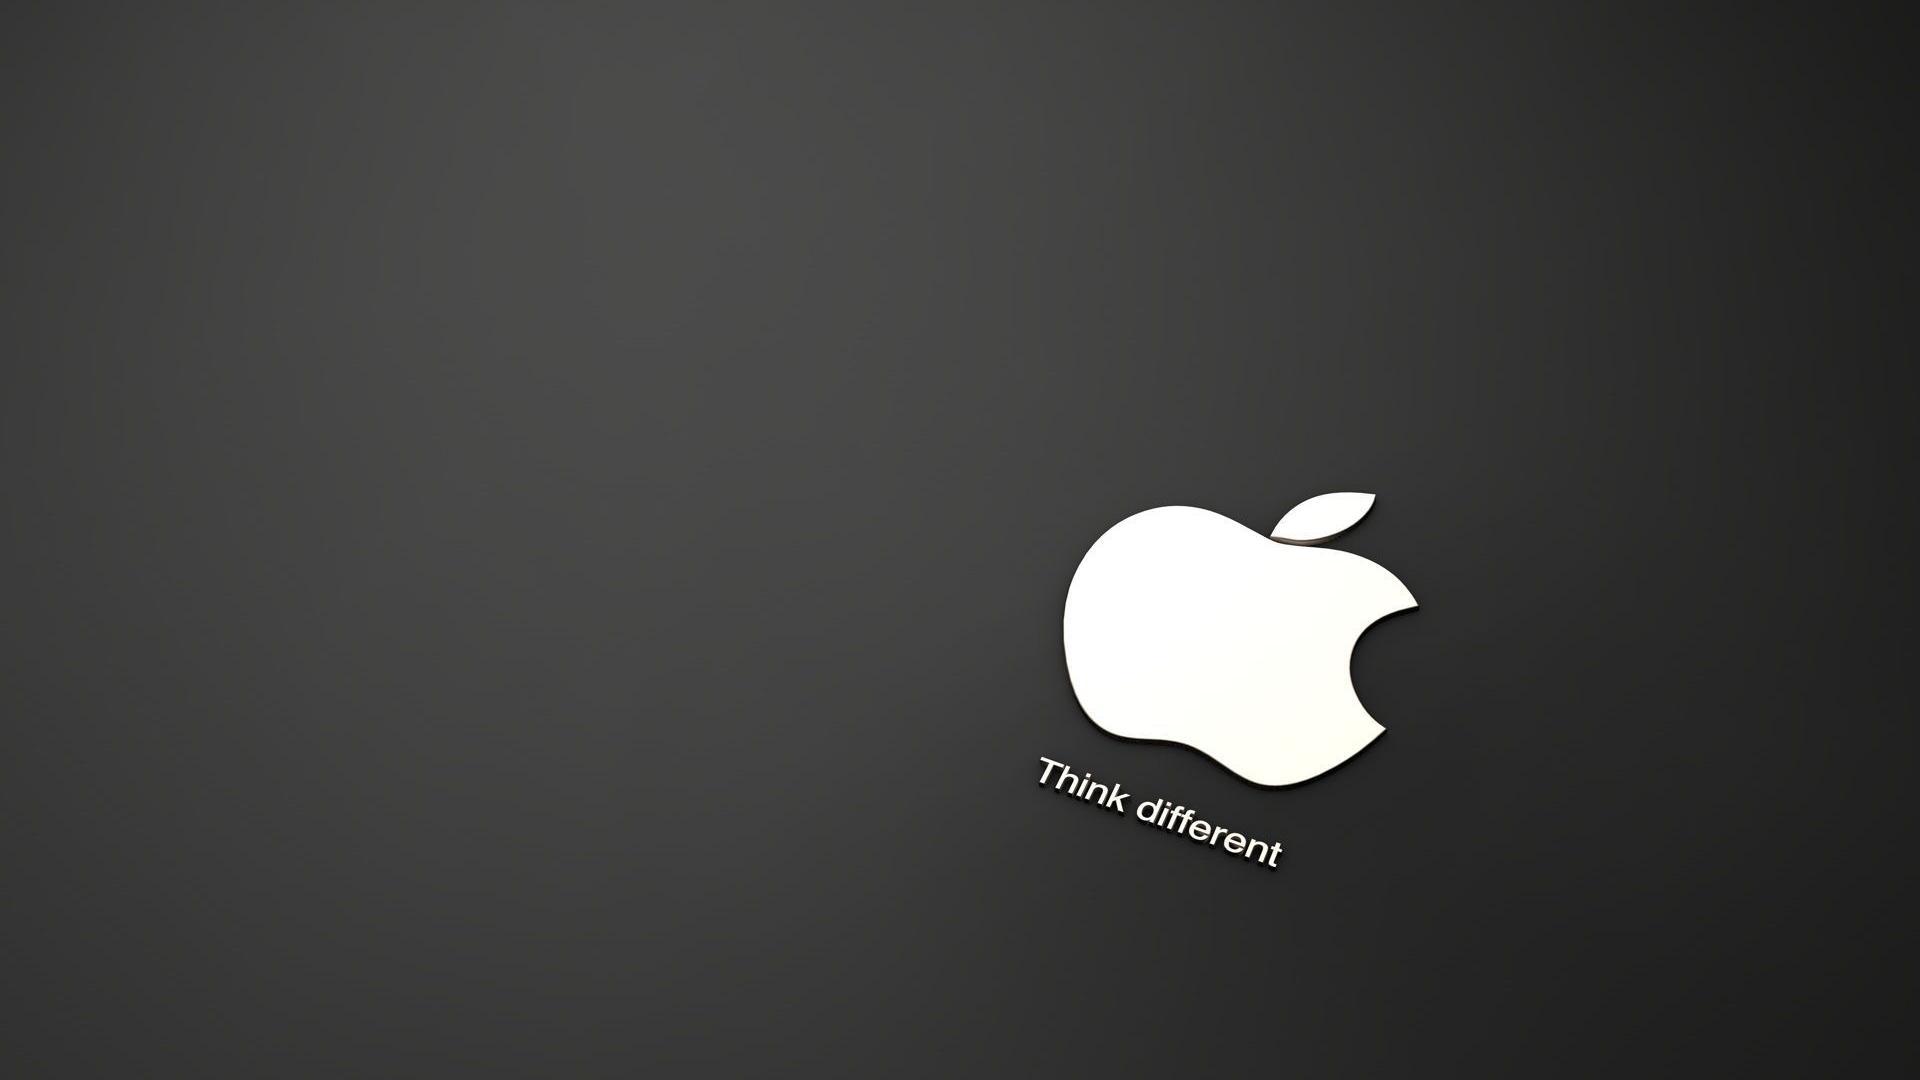 Apple Logo Black And White 1080p HD Black Wallpaper Image 58136